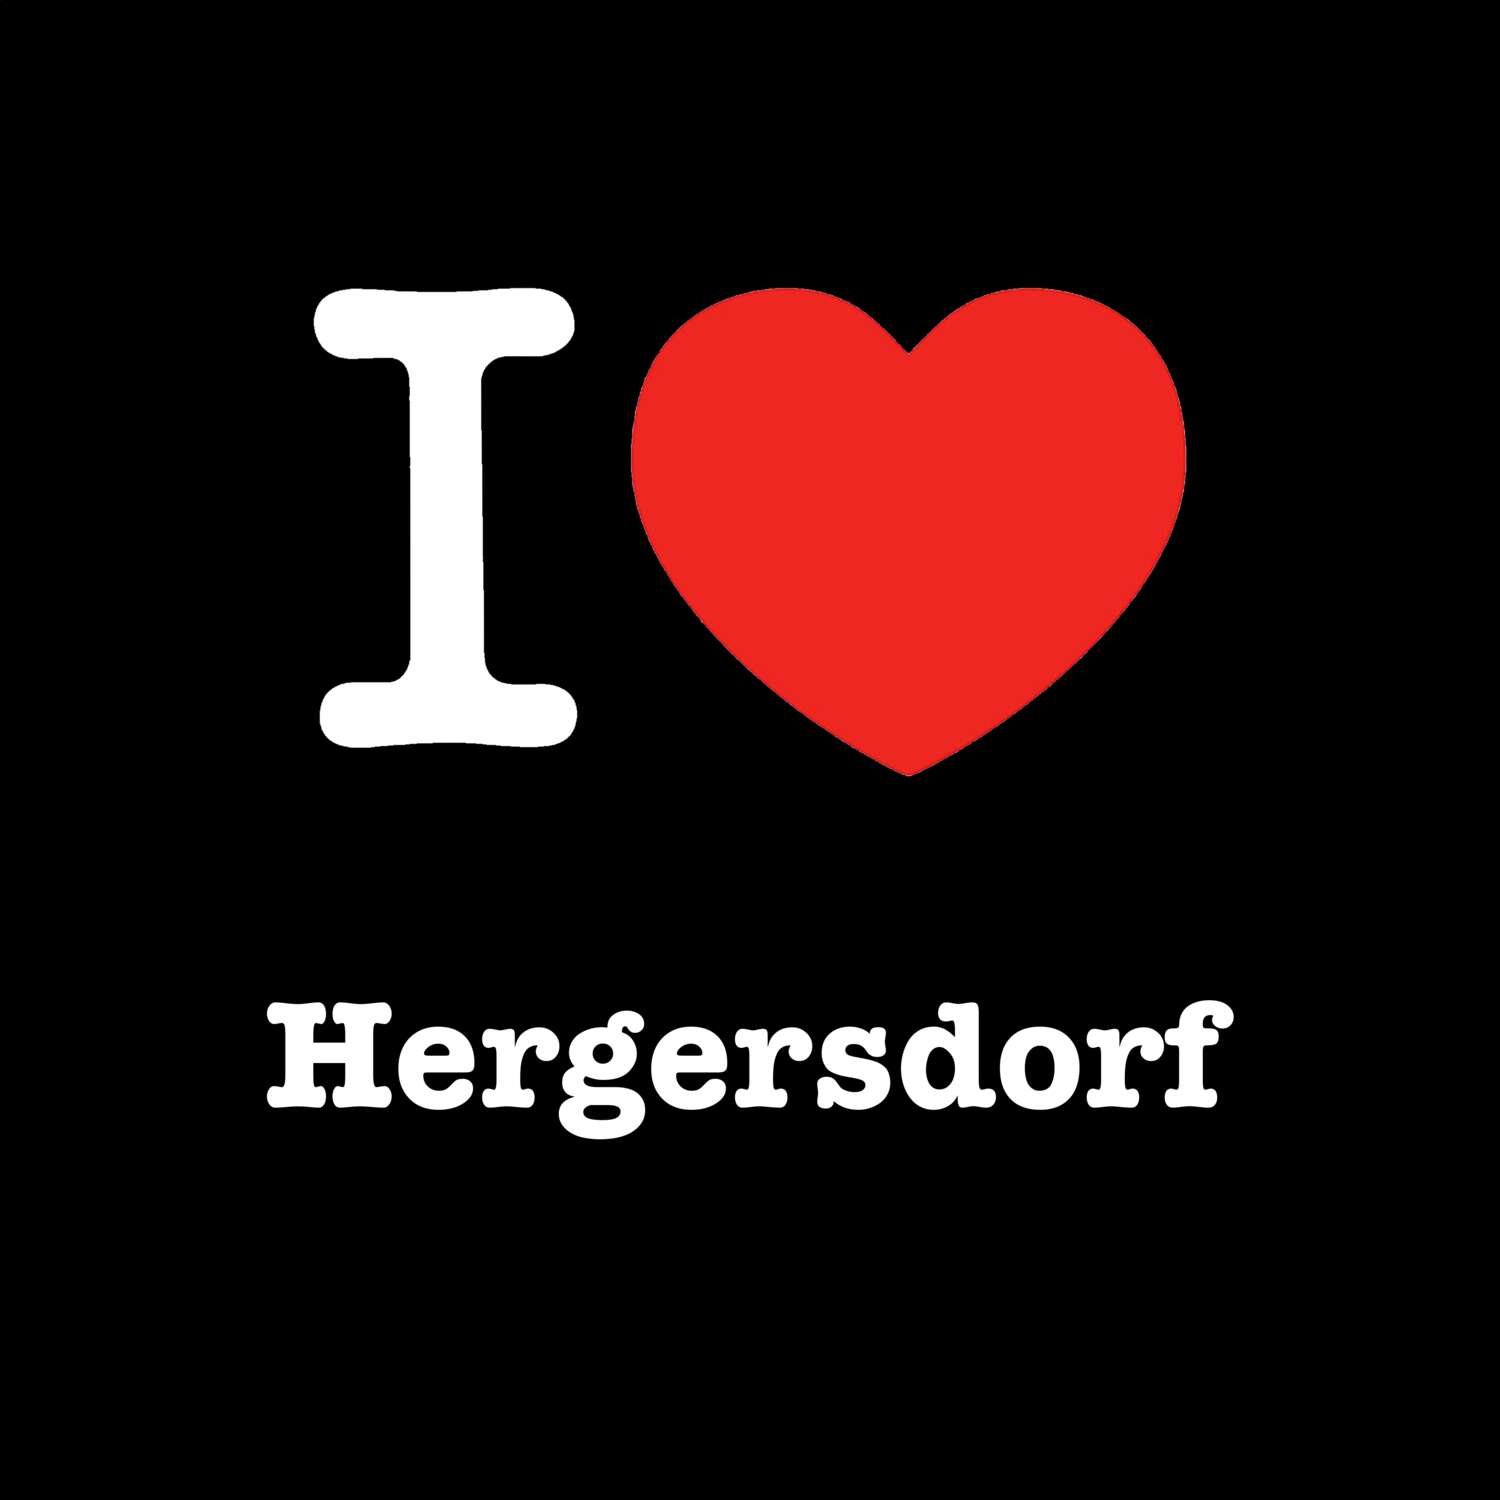 Hergersdorf T-Shirt »I love«